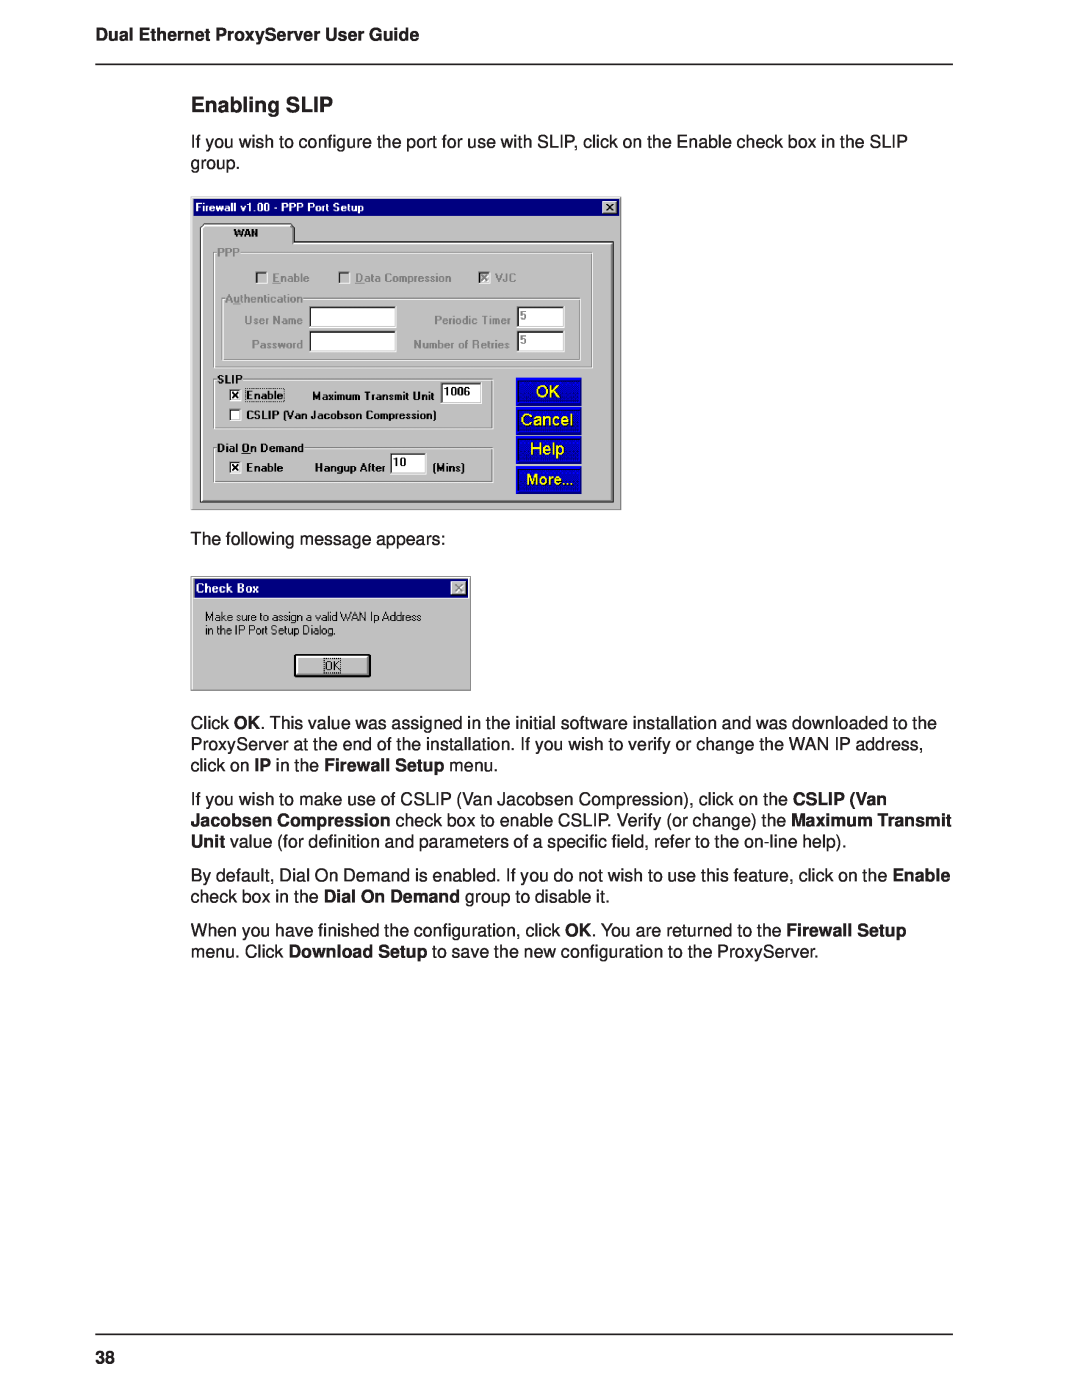 Multitech MTPSR1-120 manual Enabling SLIP, Dual Ethernet ProxyServer User Guide 